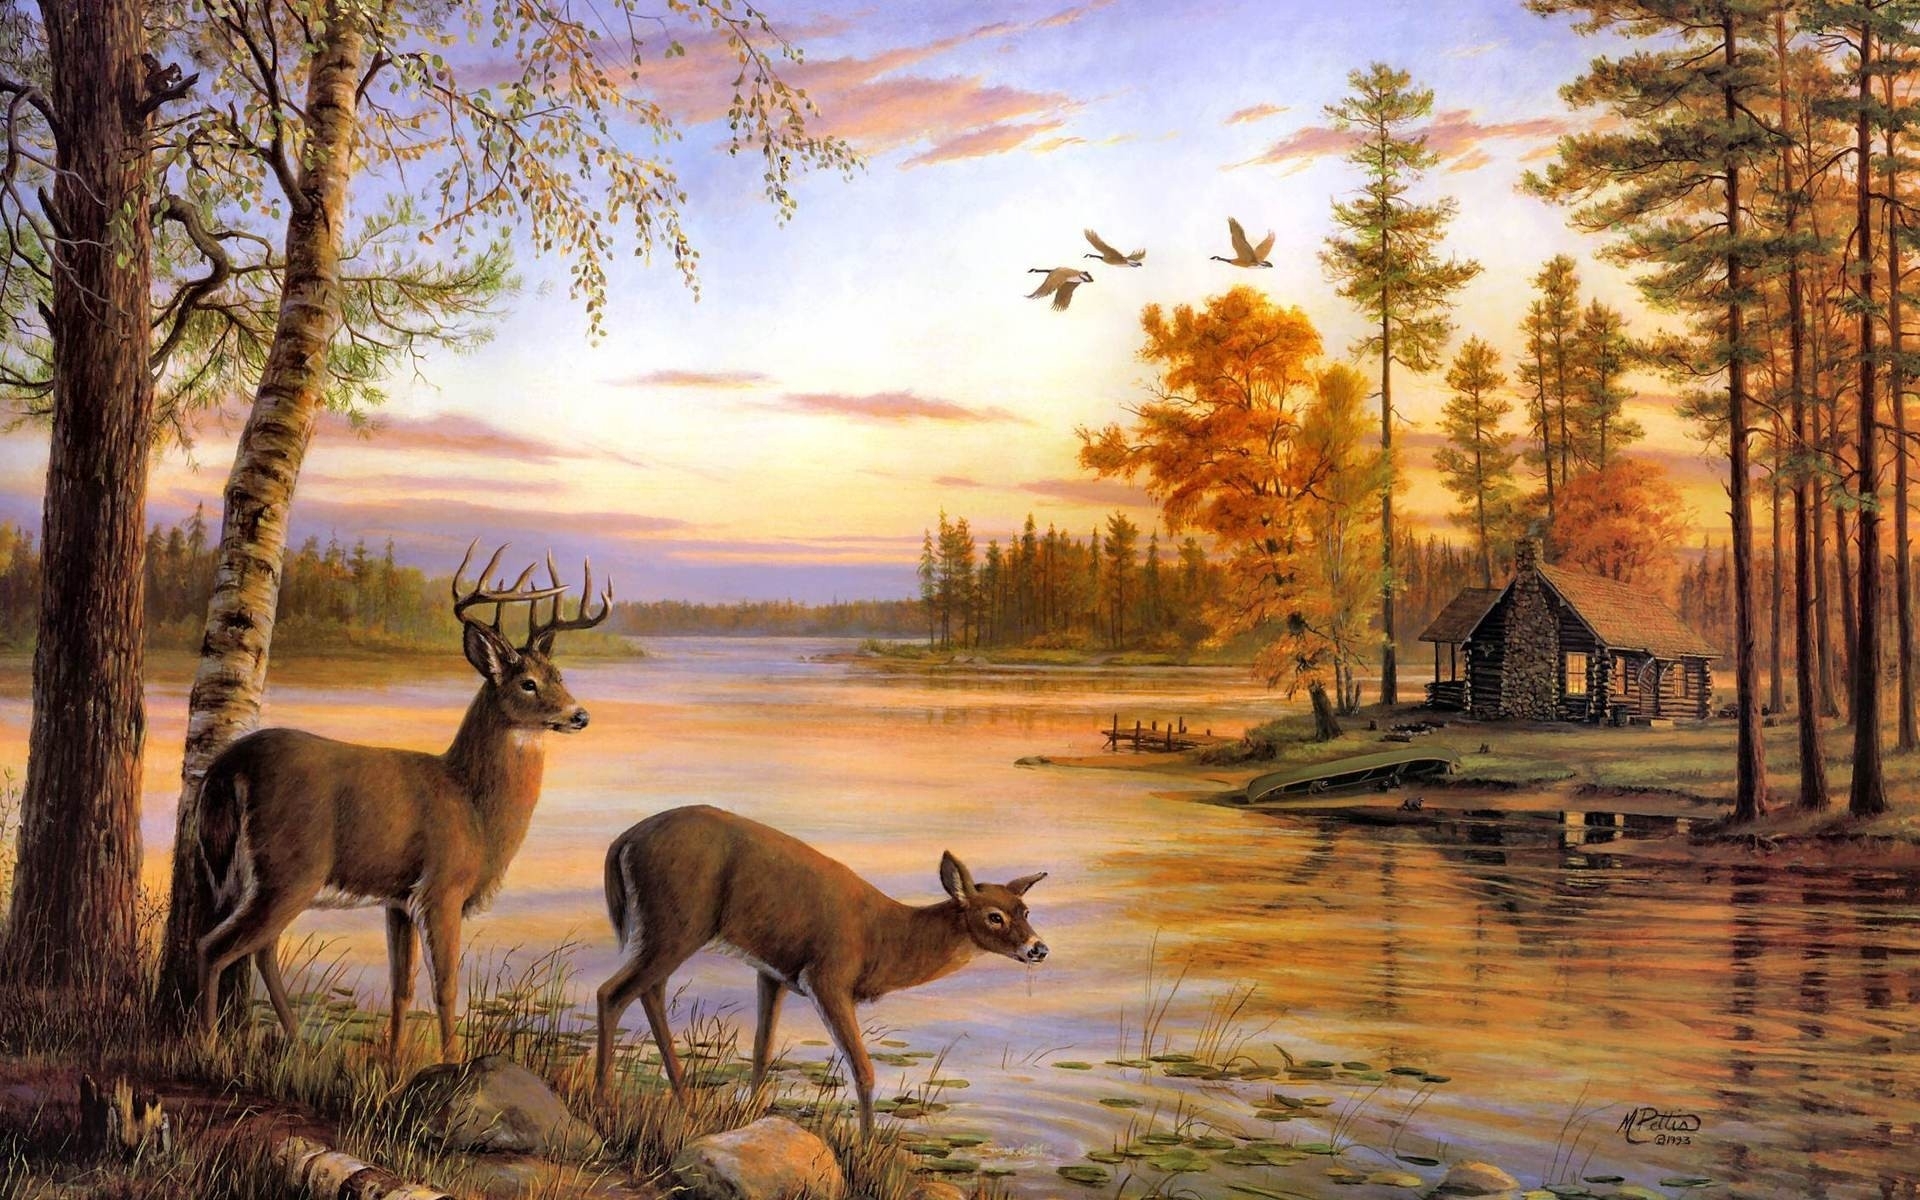  deer artwork cabin lakes 1920x1200 wallpaper High Resolution Wallpaper